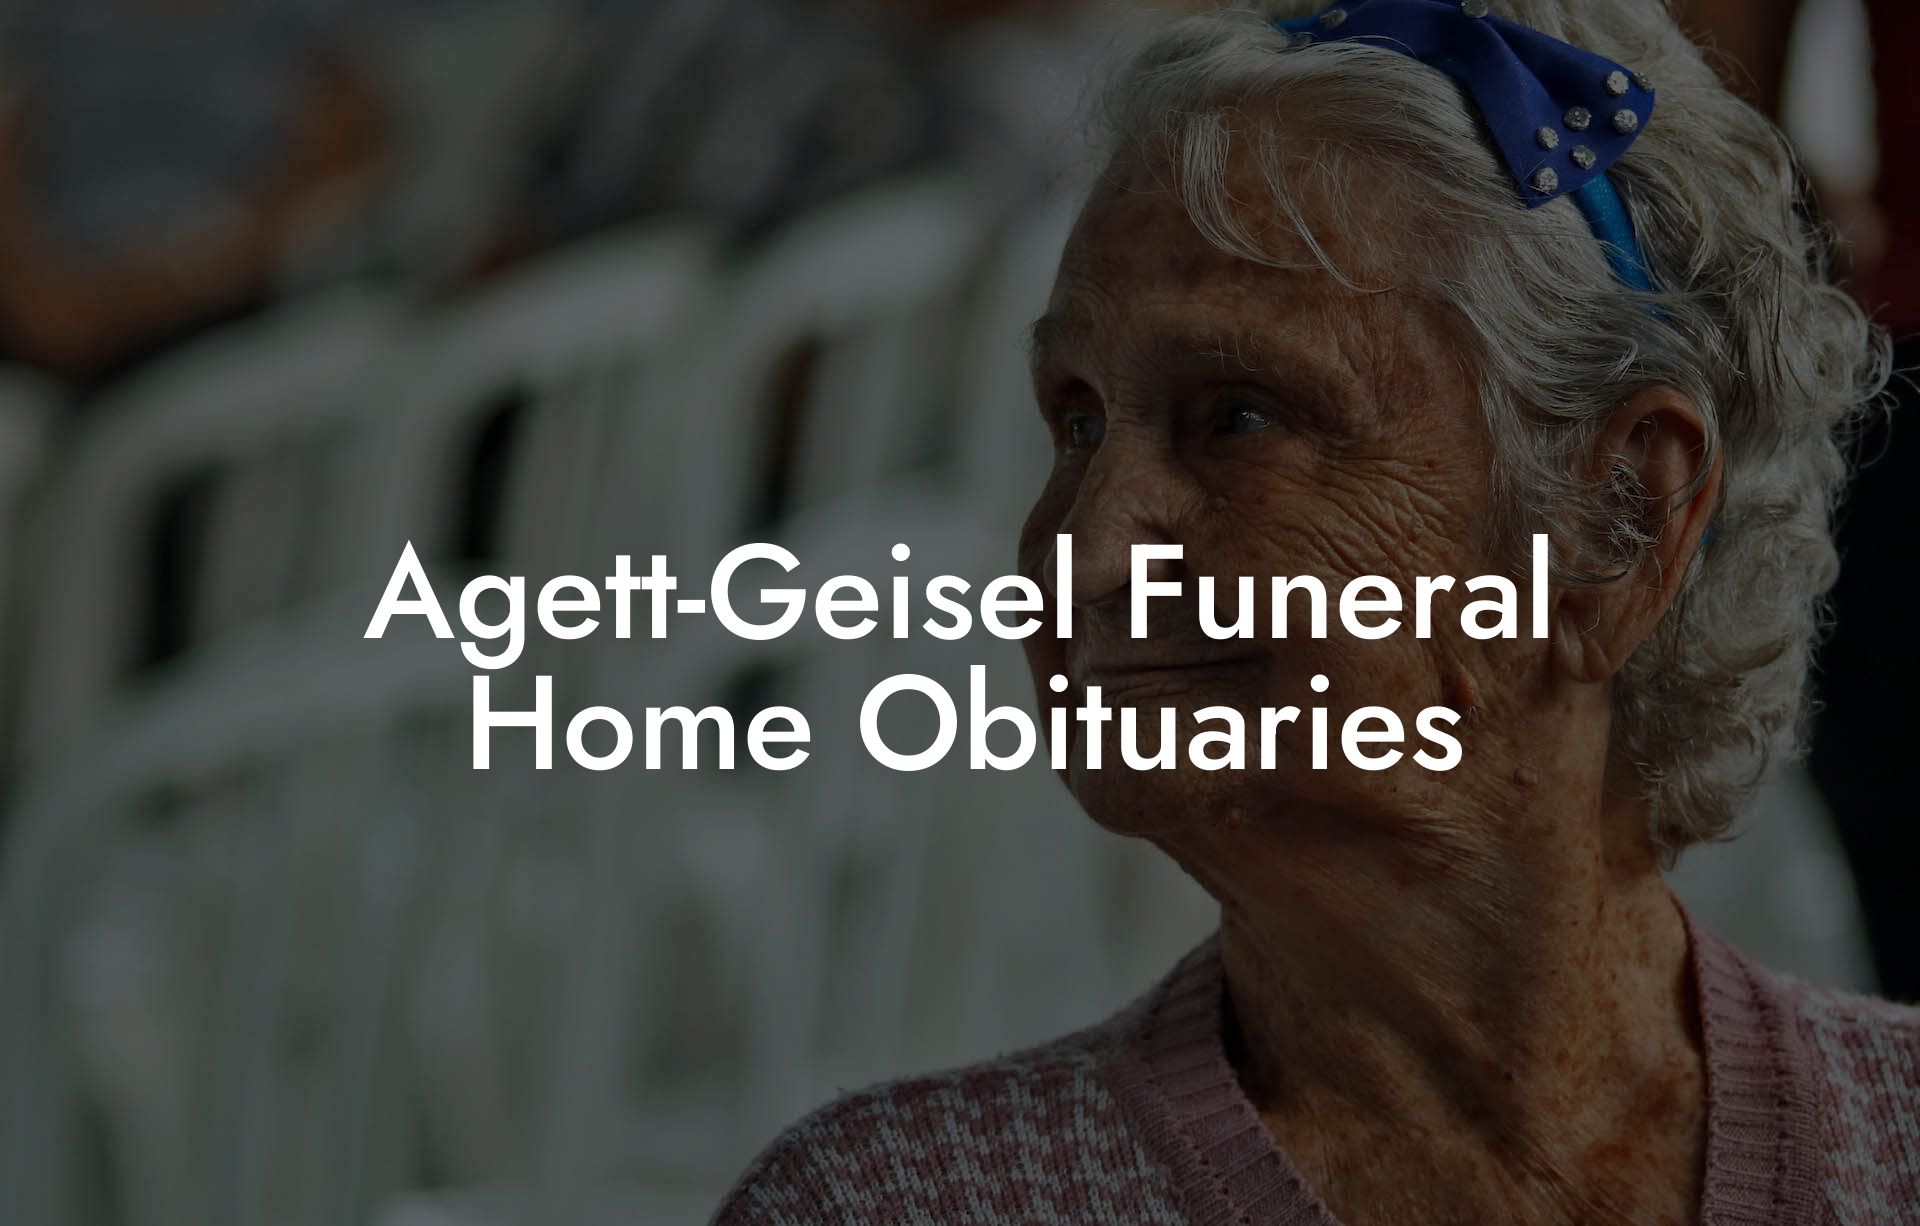 Agett-Geisel Funeral Home Obituaries